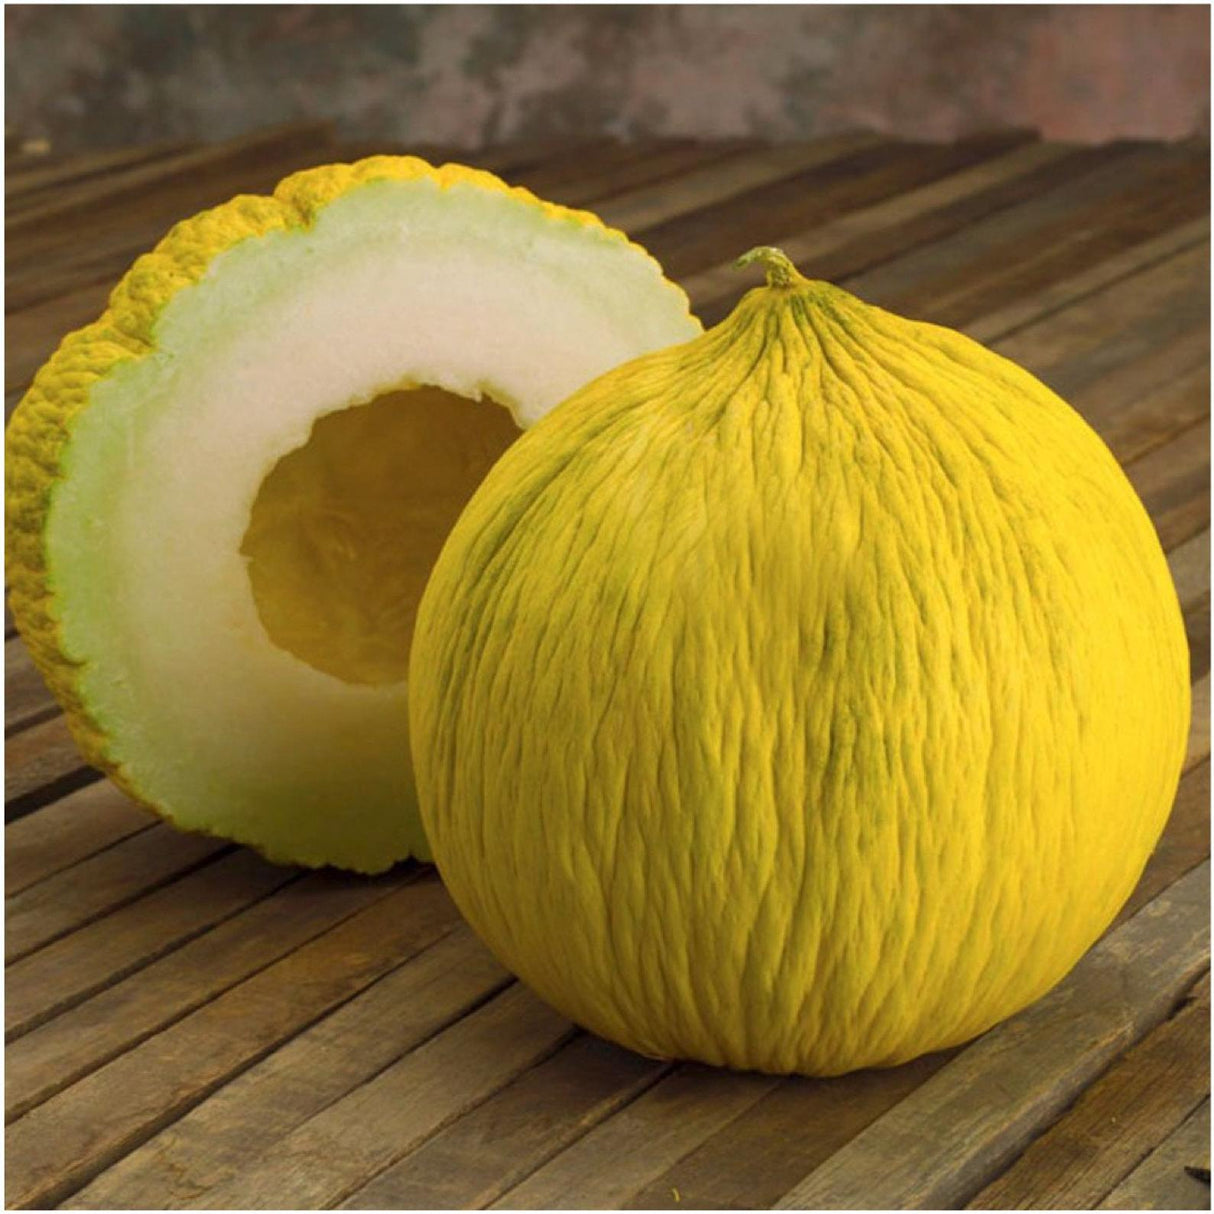 Melon Casaba Golden Beauty  •  شمام أصفرحلو - plantnmore